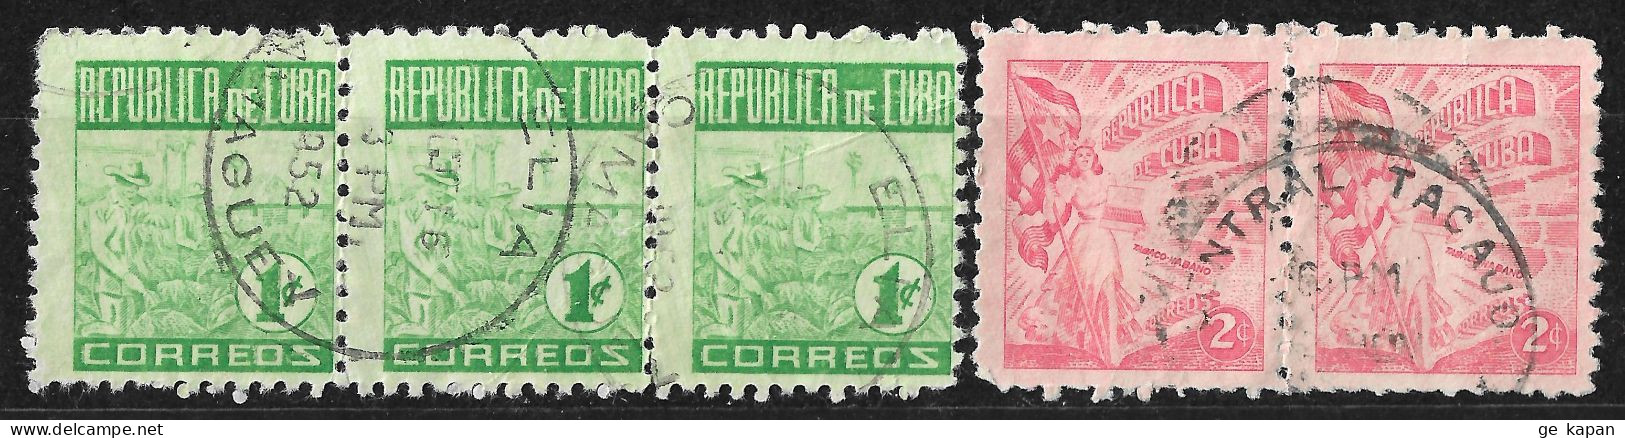 1950 CUBA Set Of Used Horizontal Strip And Pair (Michel # 229,230) CV €2.00 - Usados